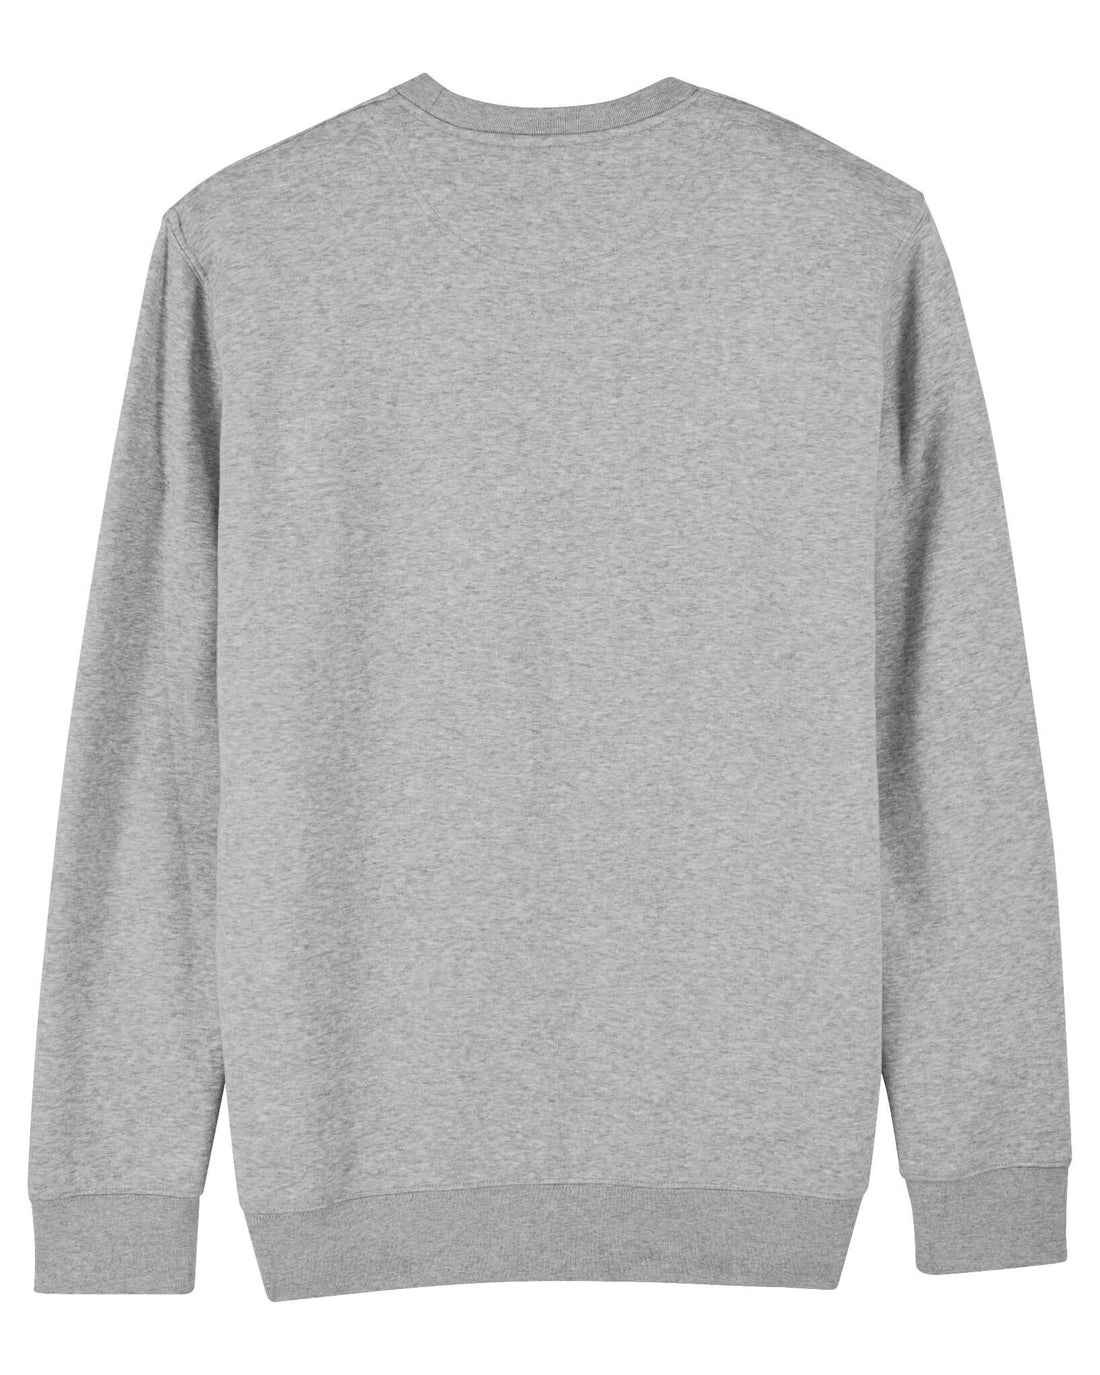 Grey Skater Sweatshirt, The Supply Network Back Print